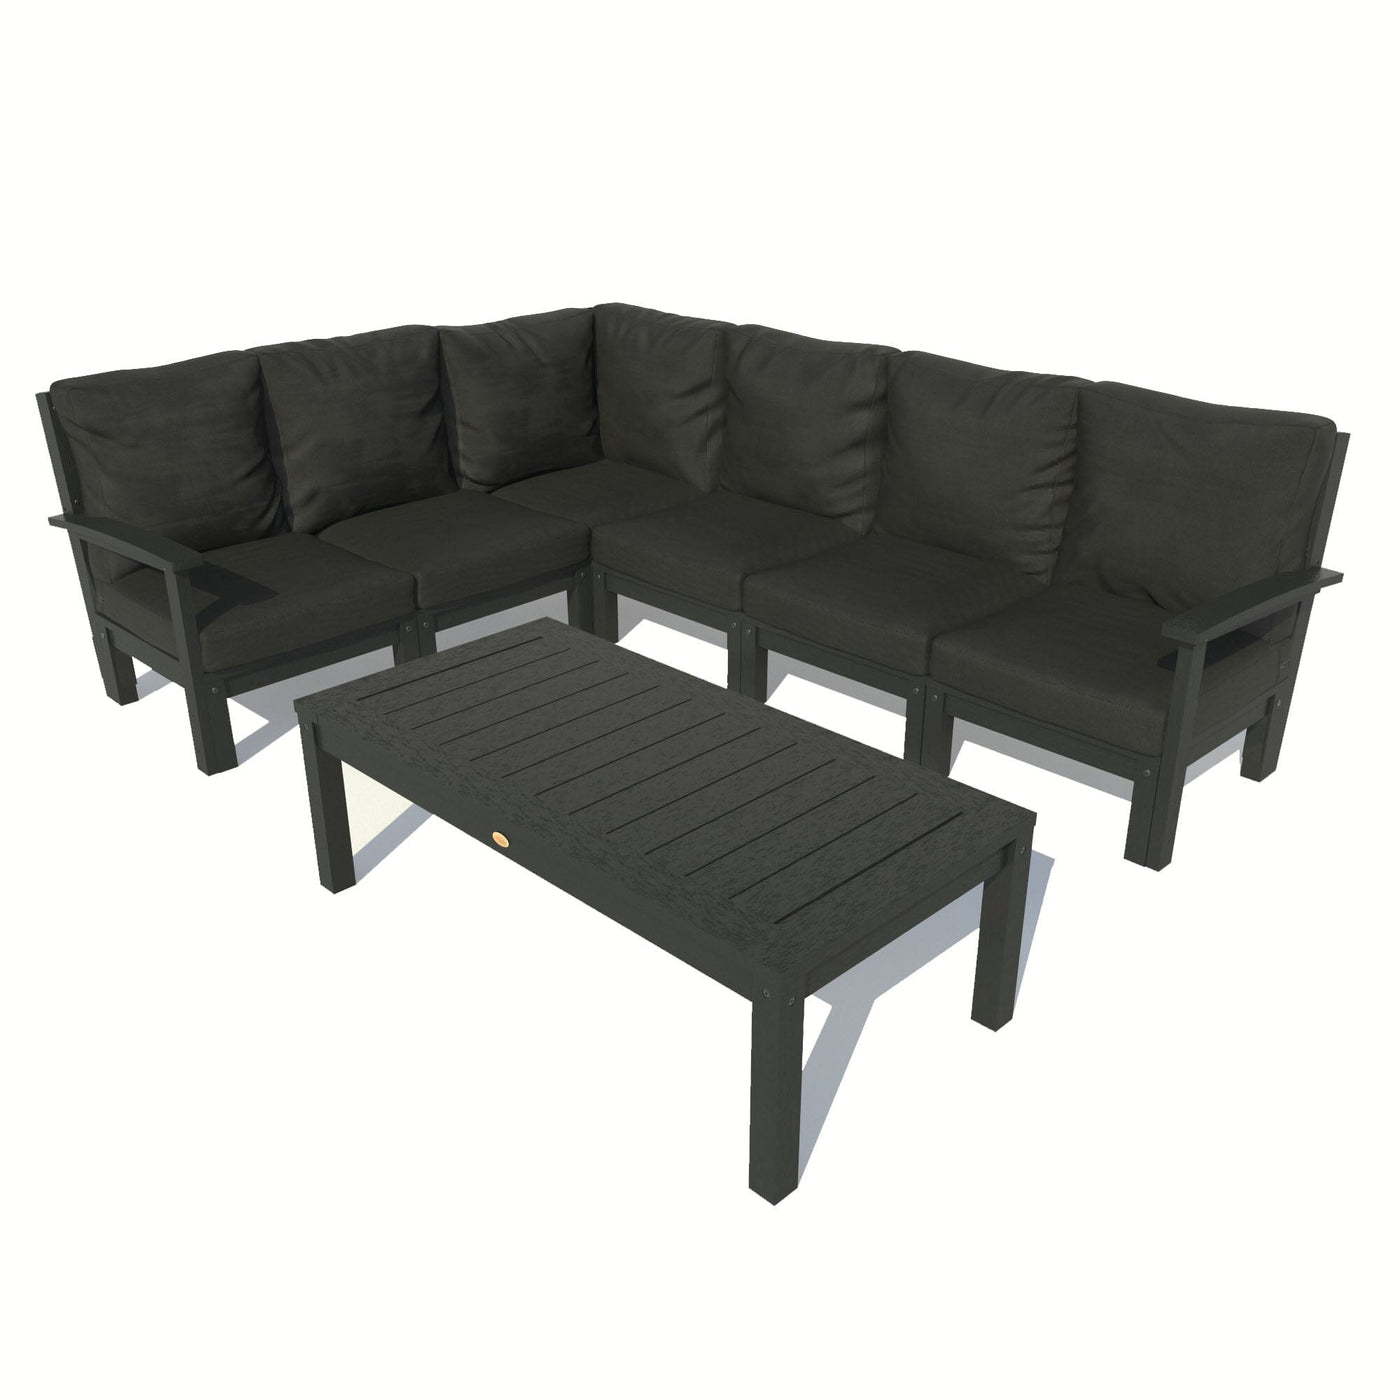 Bespoke Deep Seating: 7 Piece Sectional Sofa Set with Conversation Table Deep Seating Highwood USA Jet Black Black 